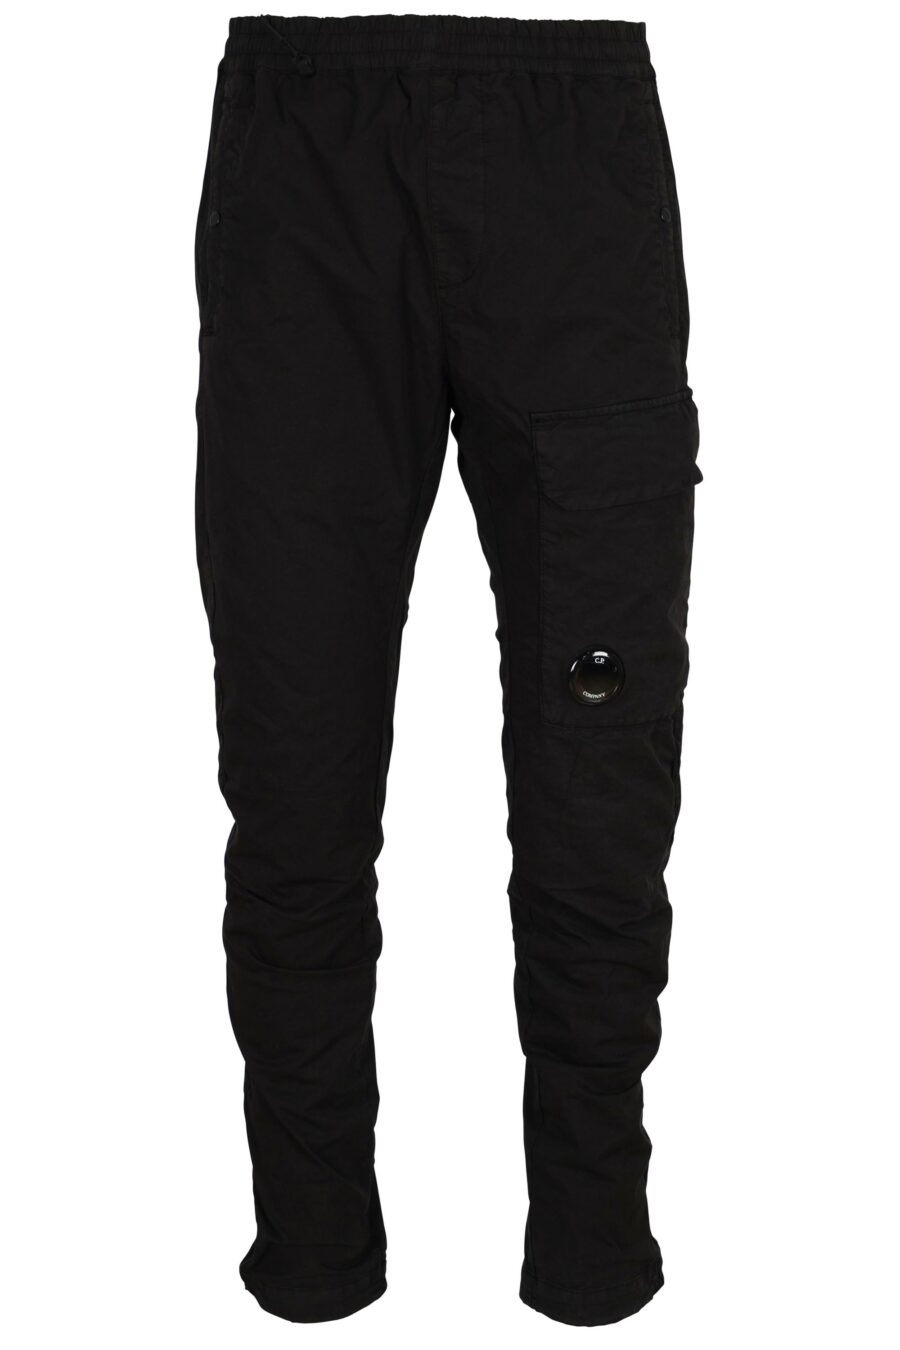 Pantalon cargo noir avec mini-logo en forme de lentille - 7620943805123